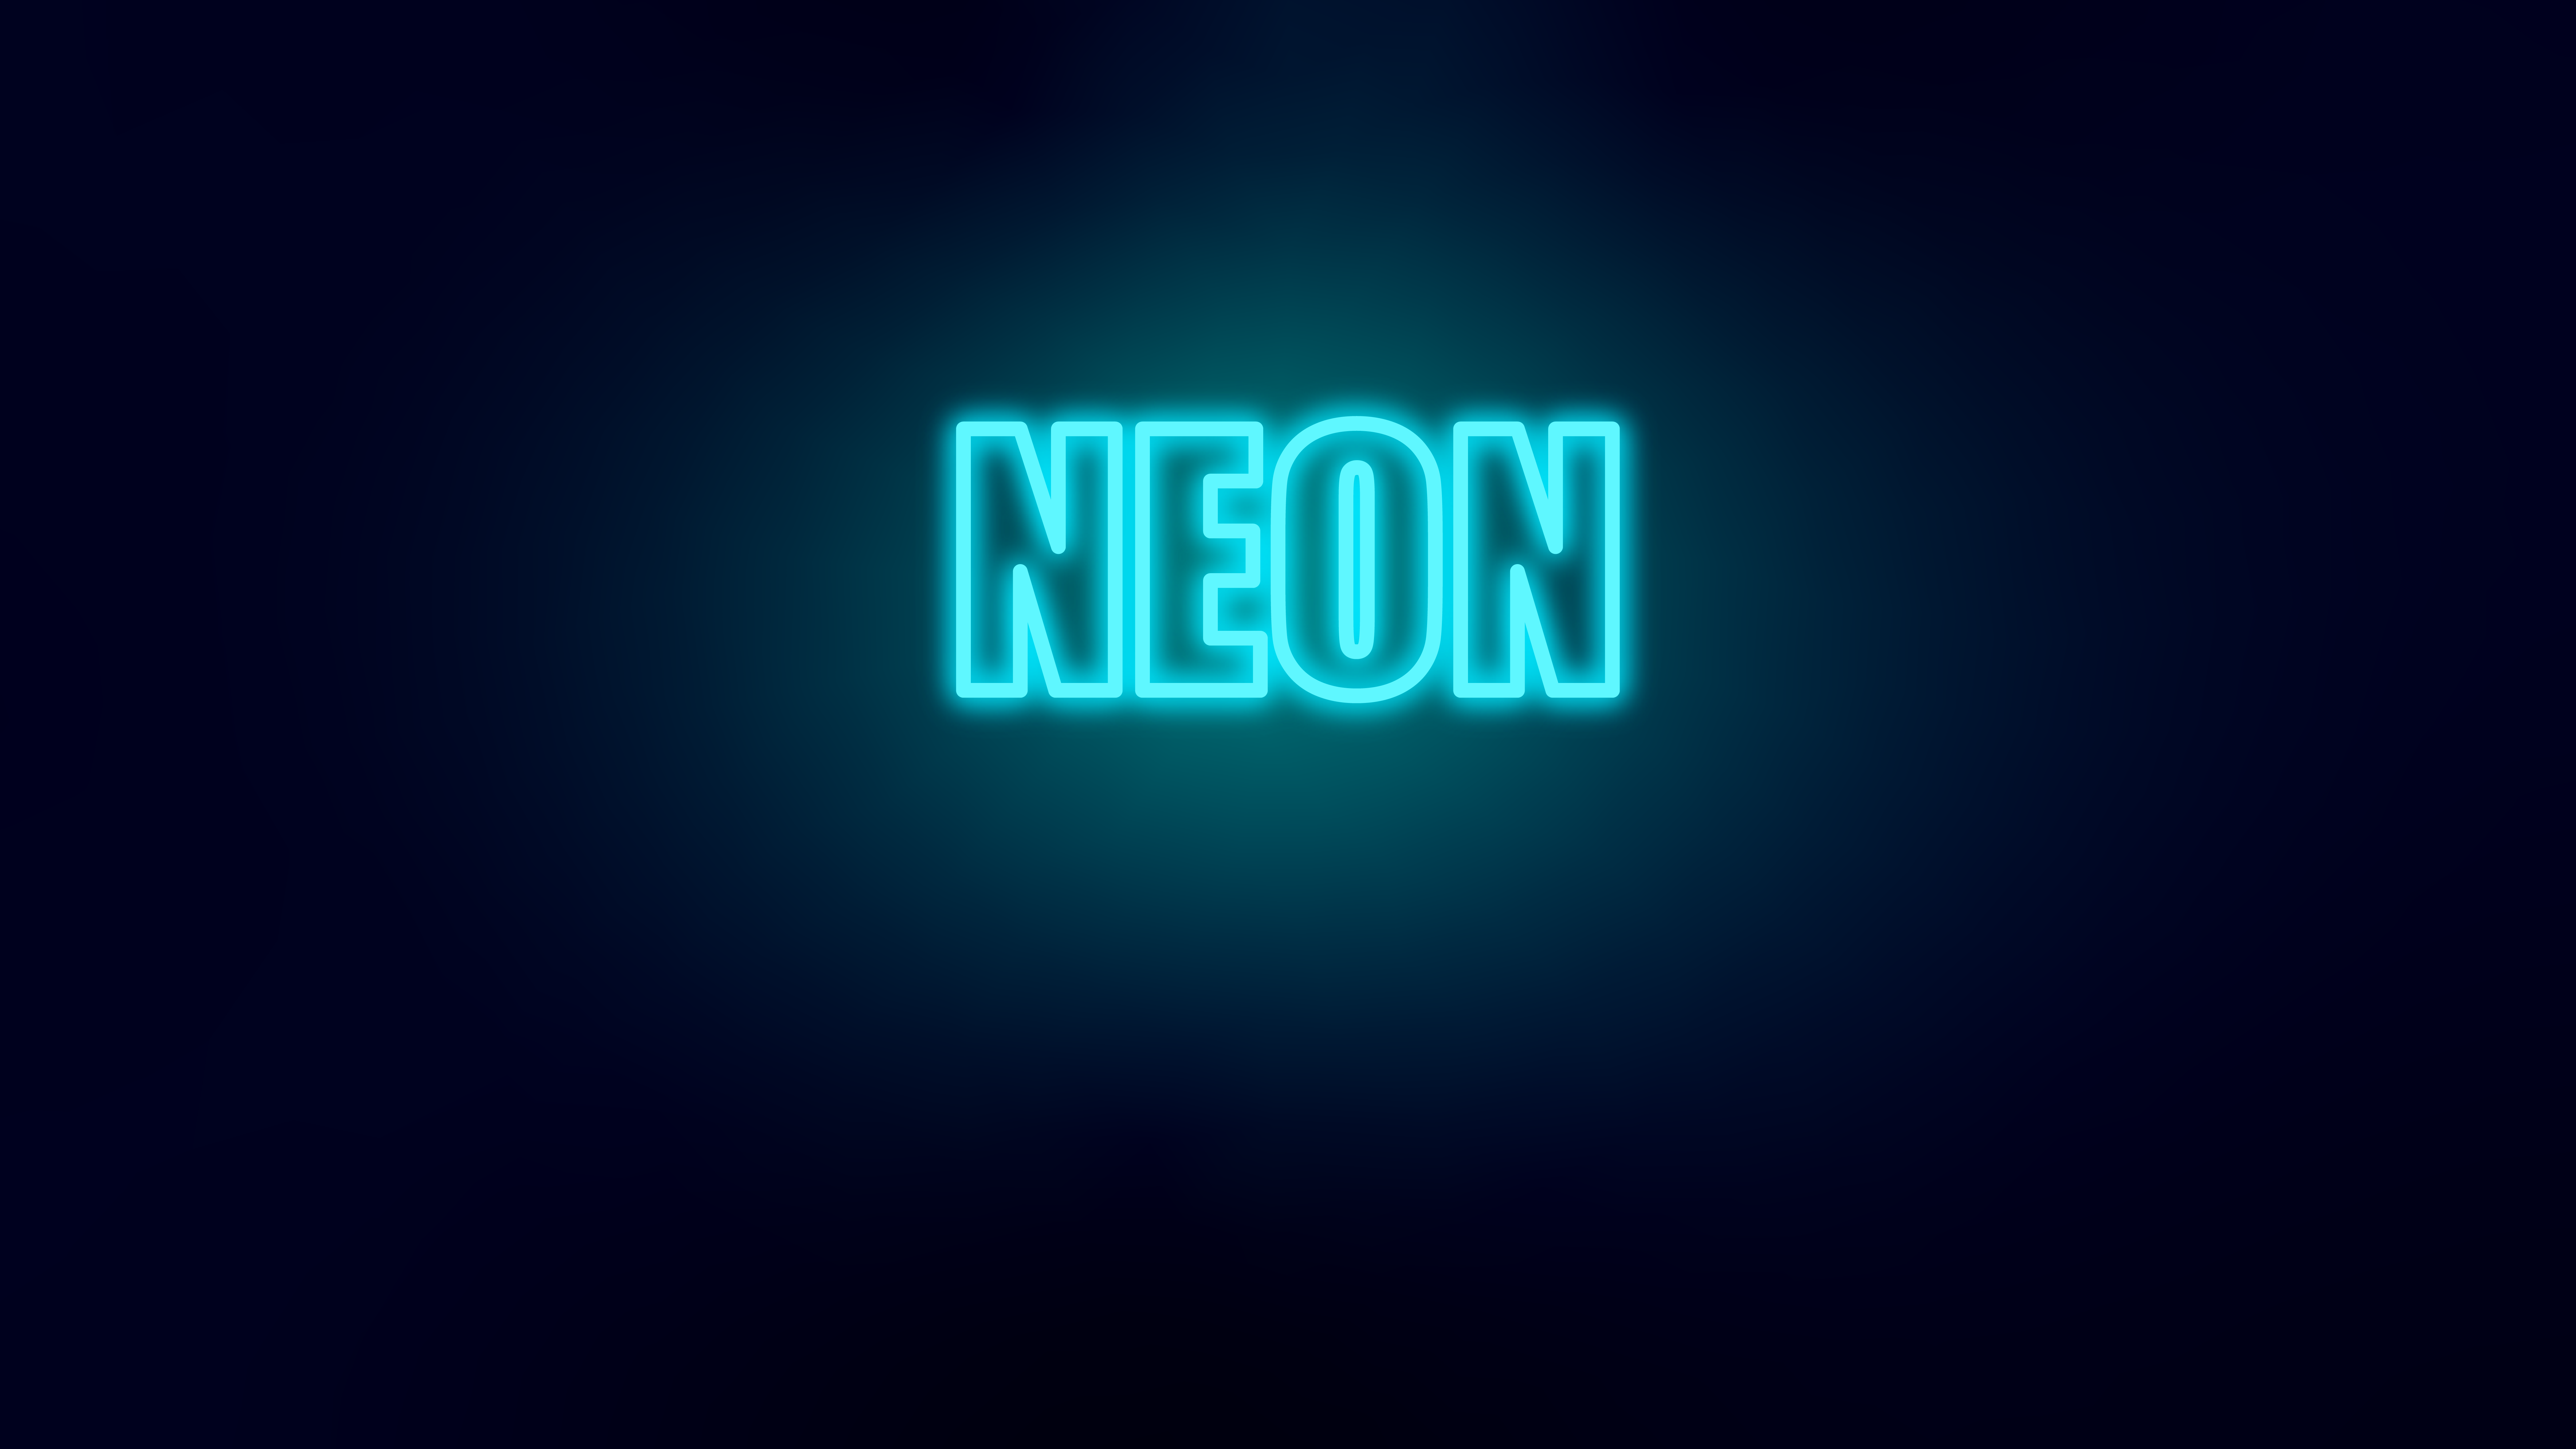 Neon Typography Text Minimalism 8000x4500